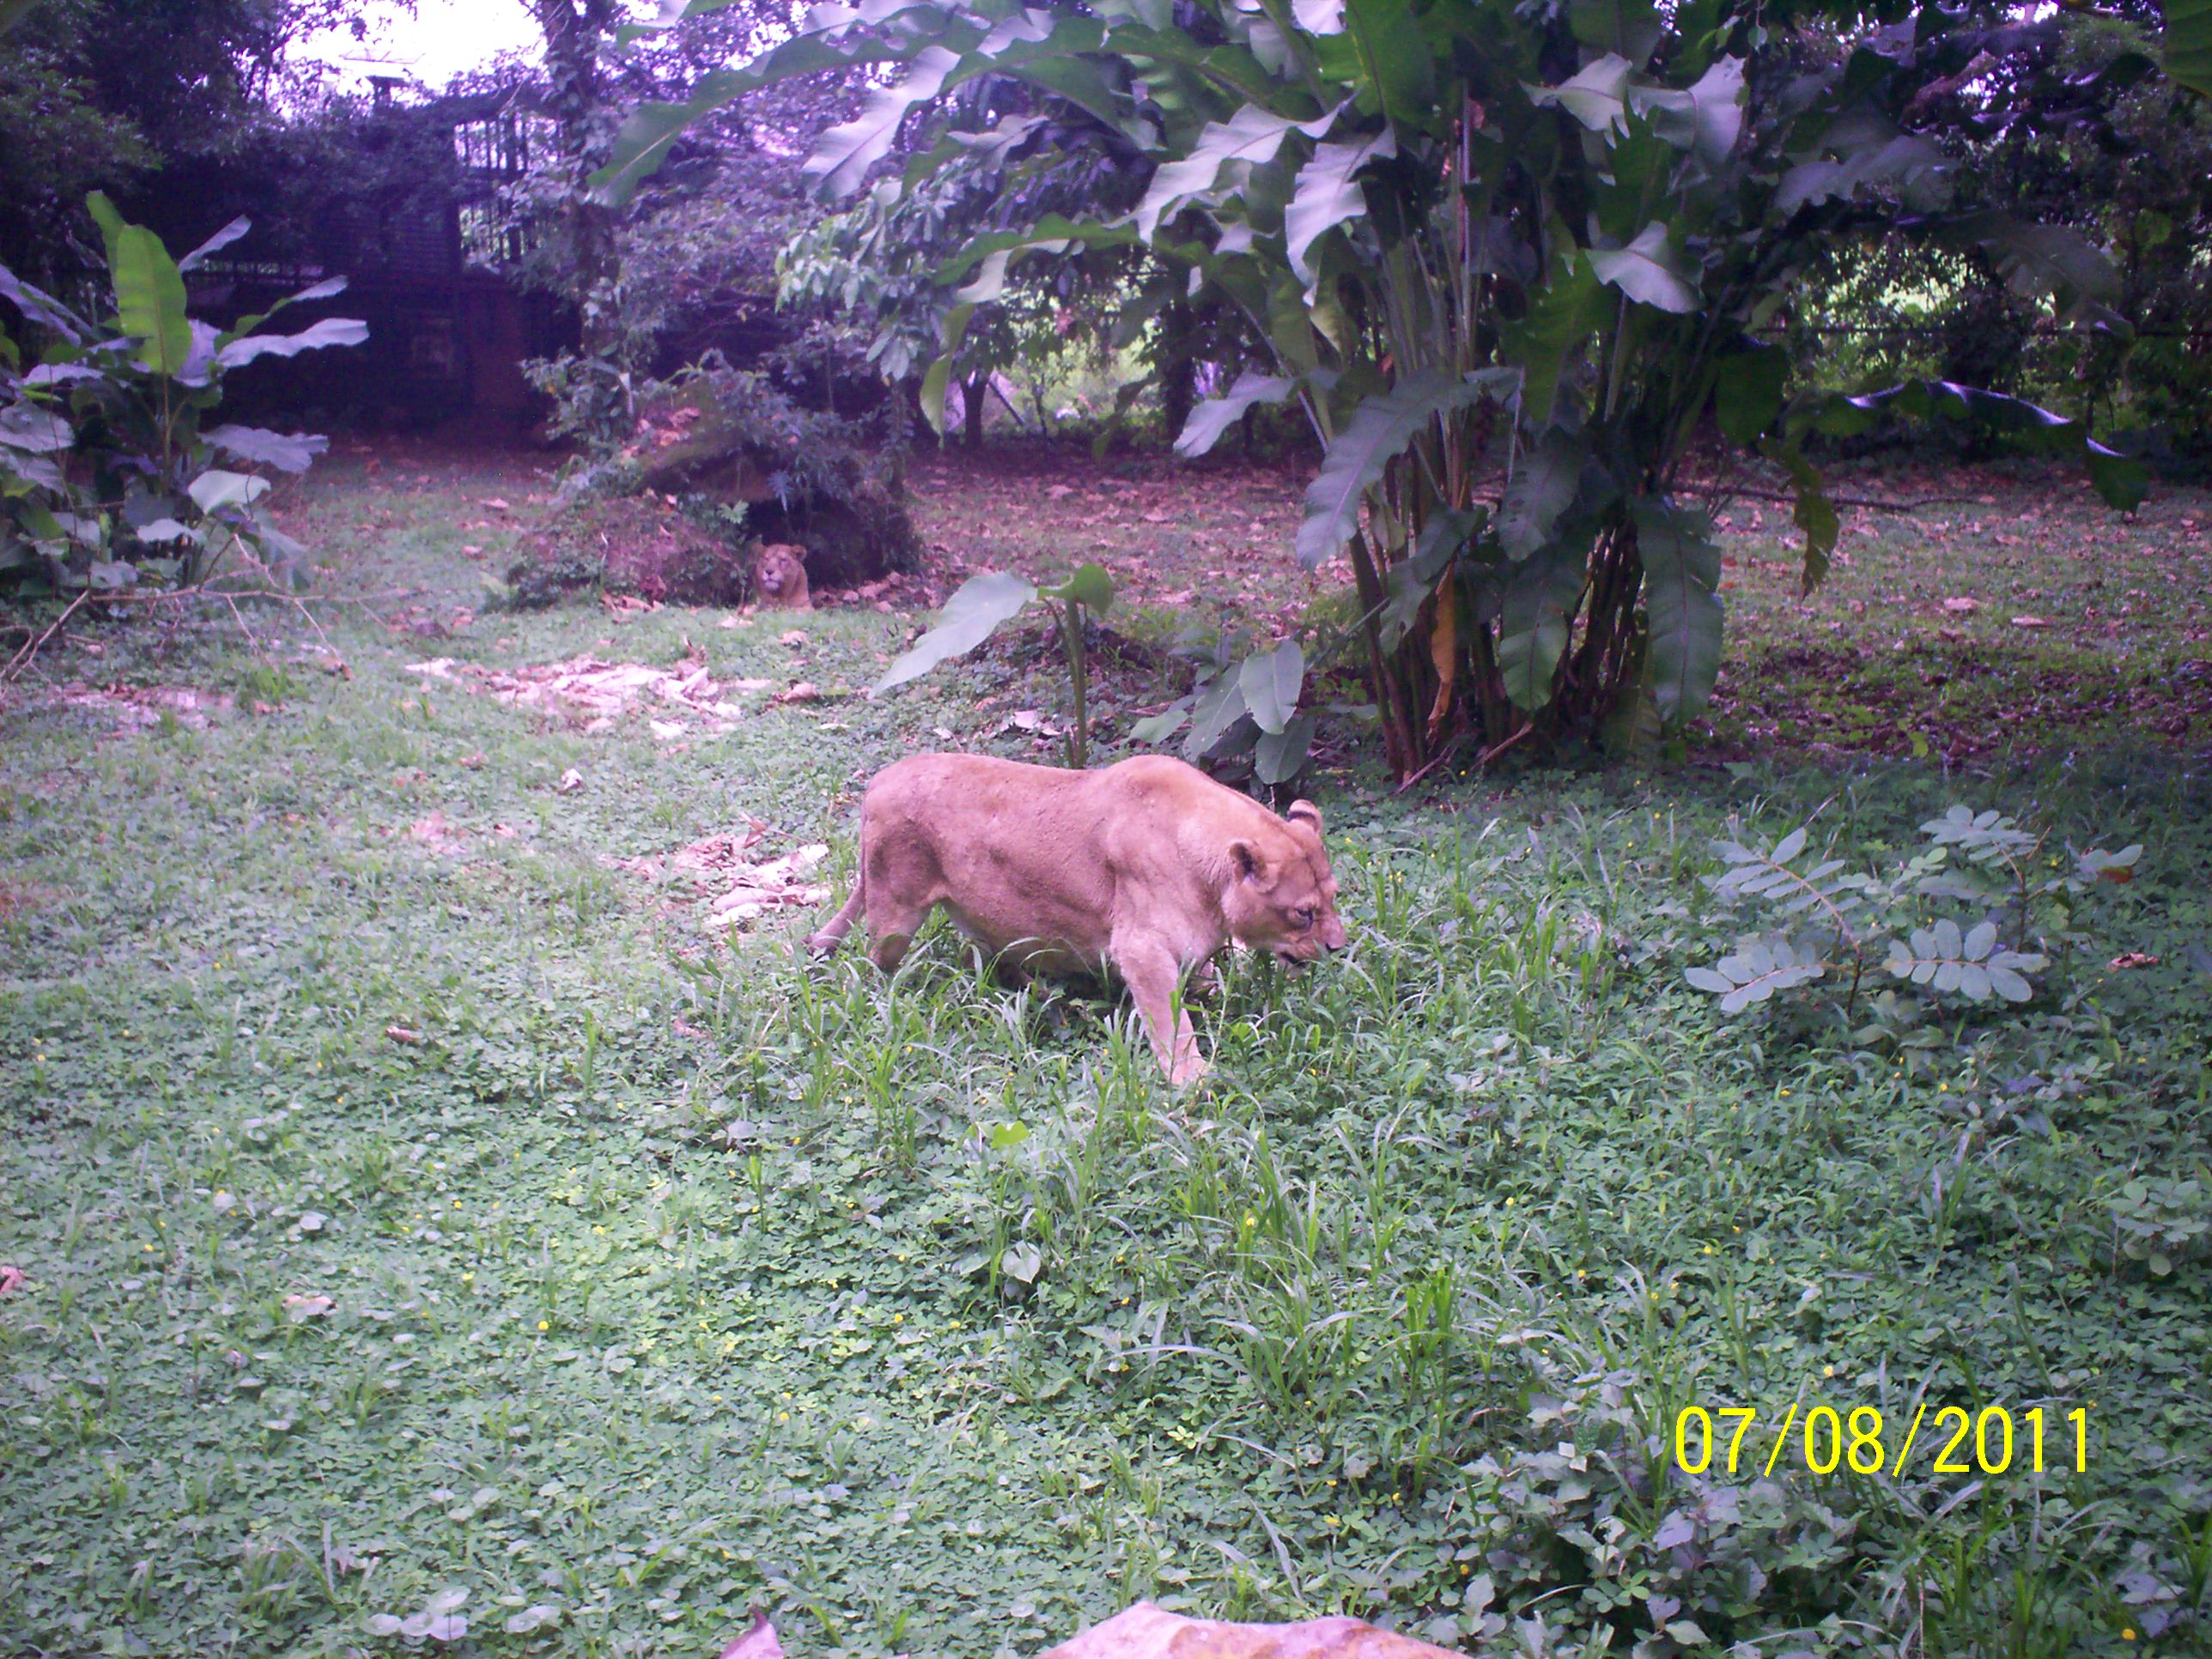 Foto: LEON Nombre Binomial: Panthera leo - San Carlos (La Marina) (Alajuela), Costa Rica